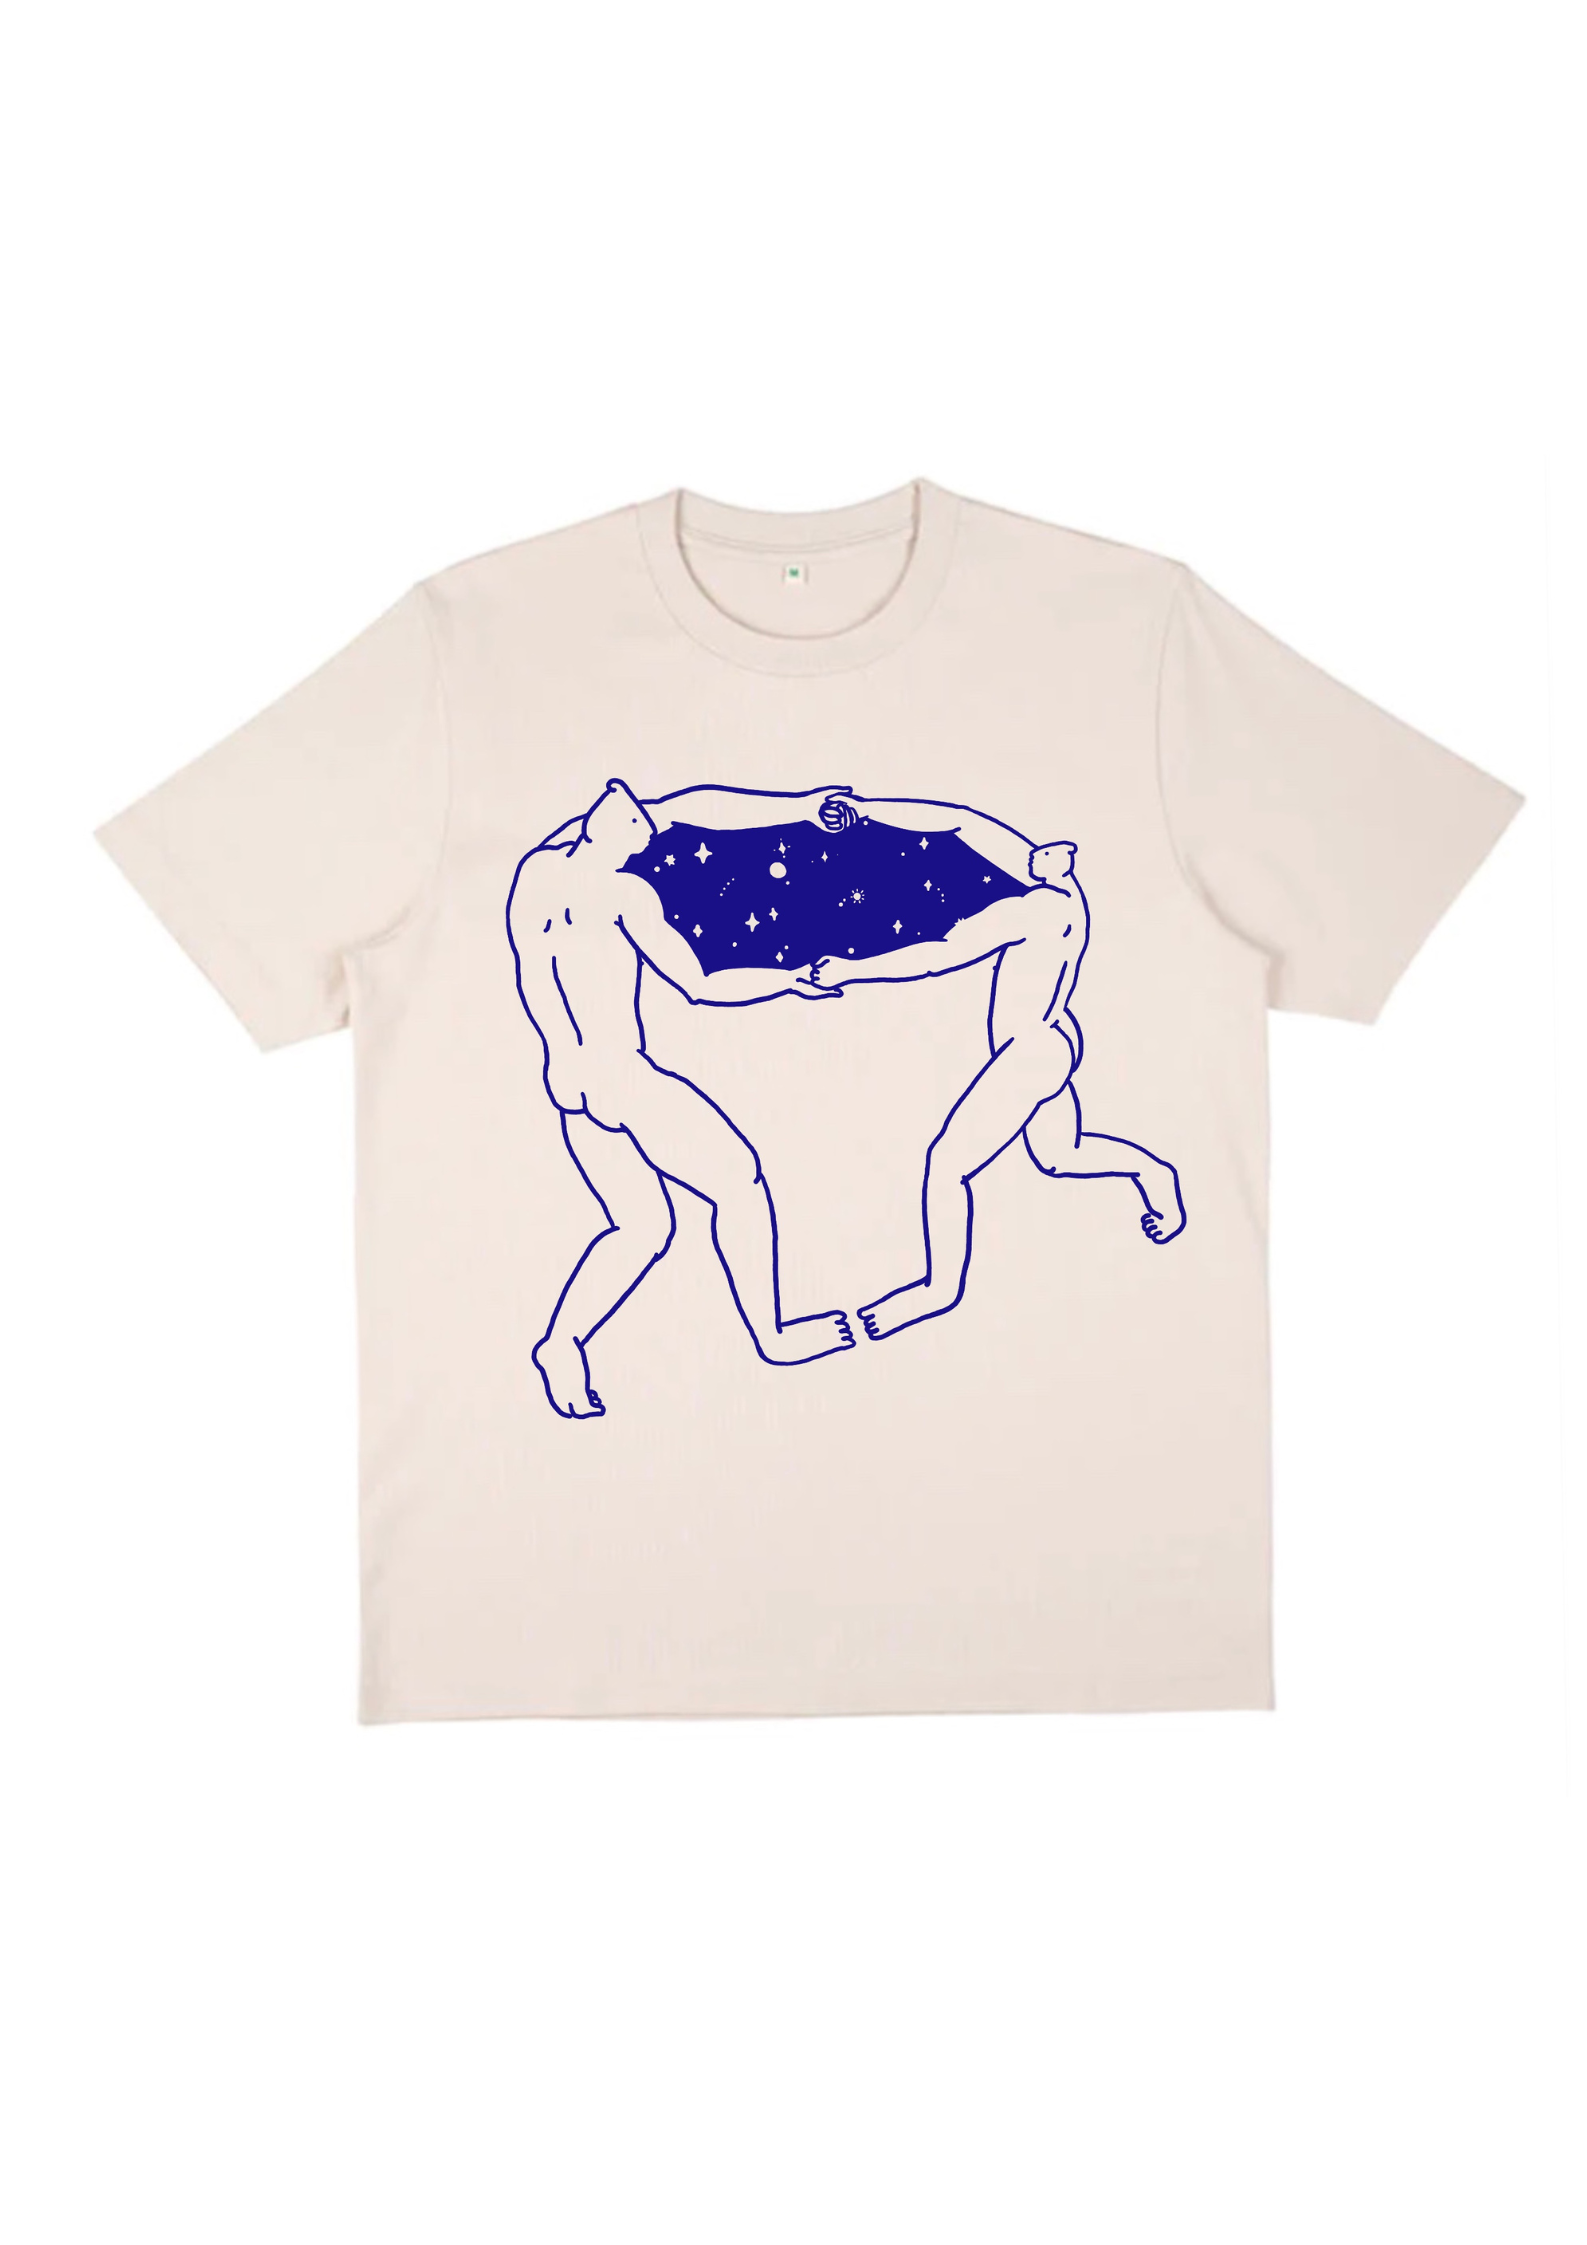 Making Space T-shirt